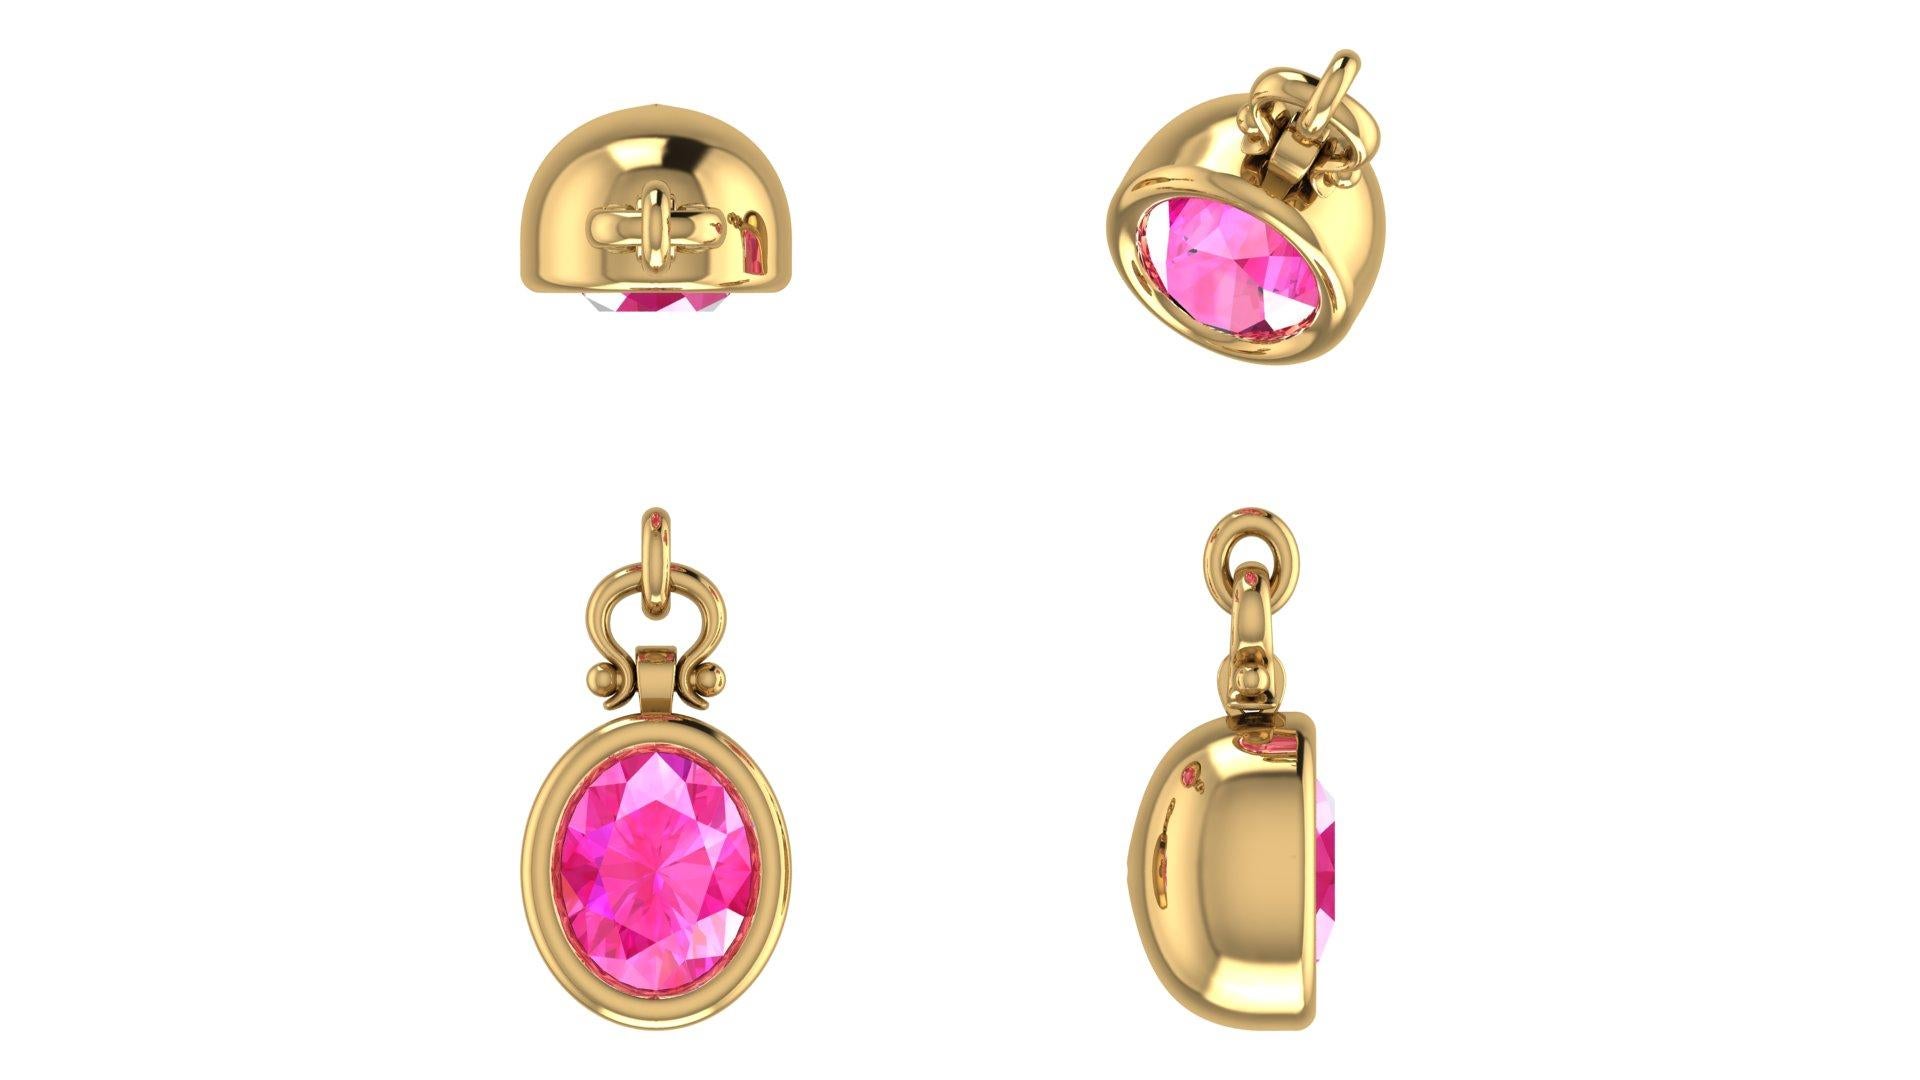 Contemporary Berberyn Certified 3.12 Carat Oval Cut Pink Sapphire Pendant Necklace in 18K For Sale